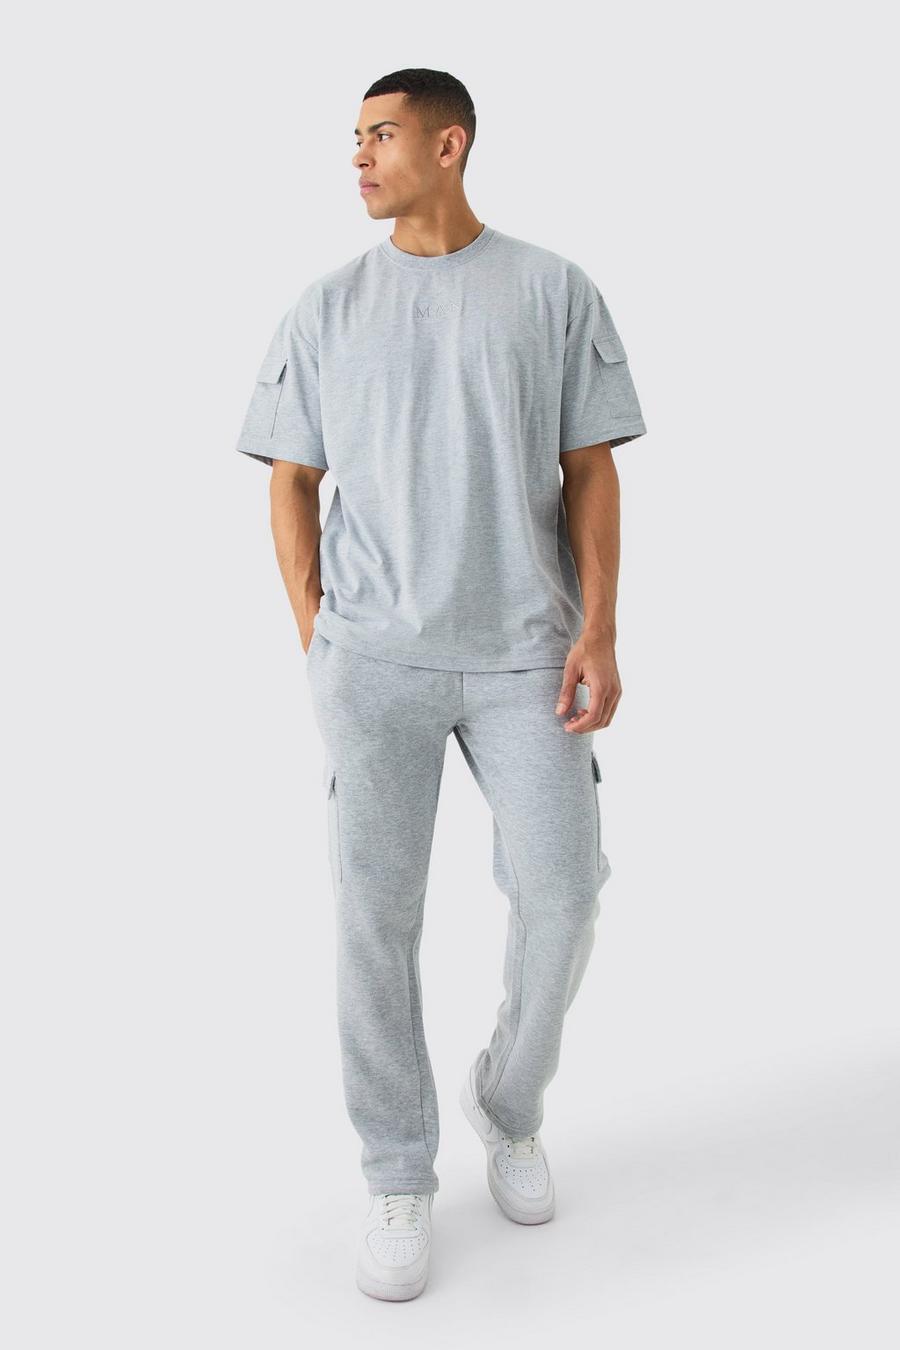 Ensemble oversize avec t-shirt et jogging - MAN, Grey marl